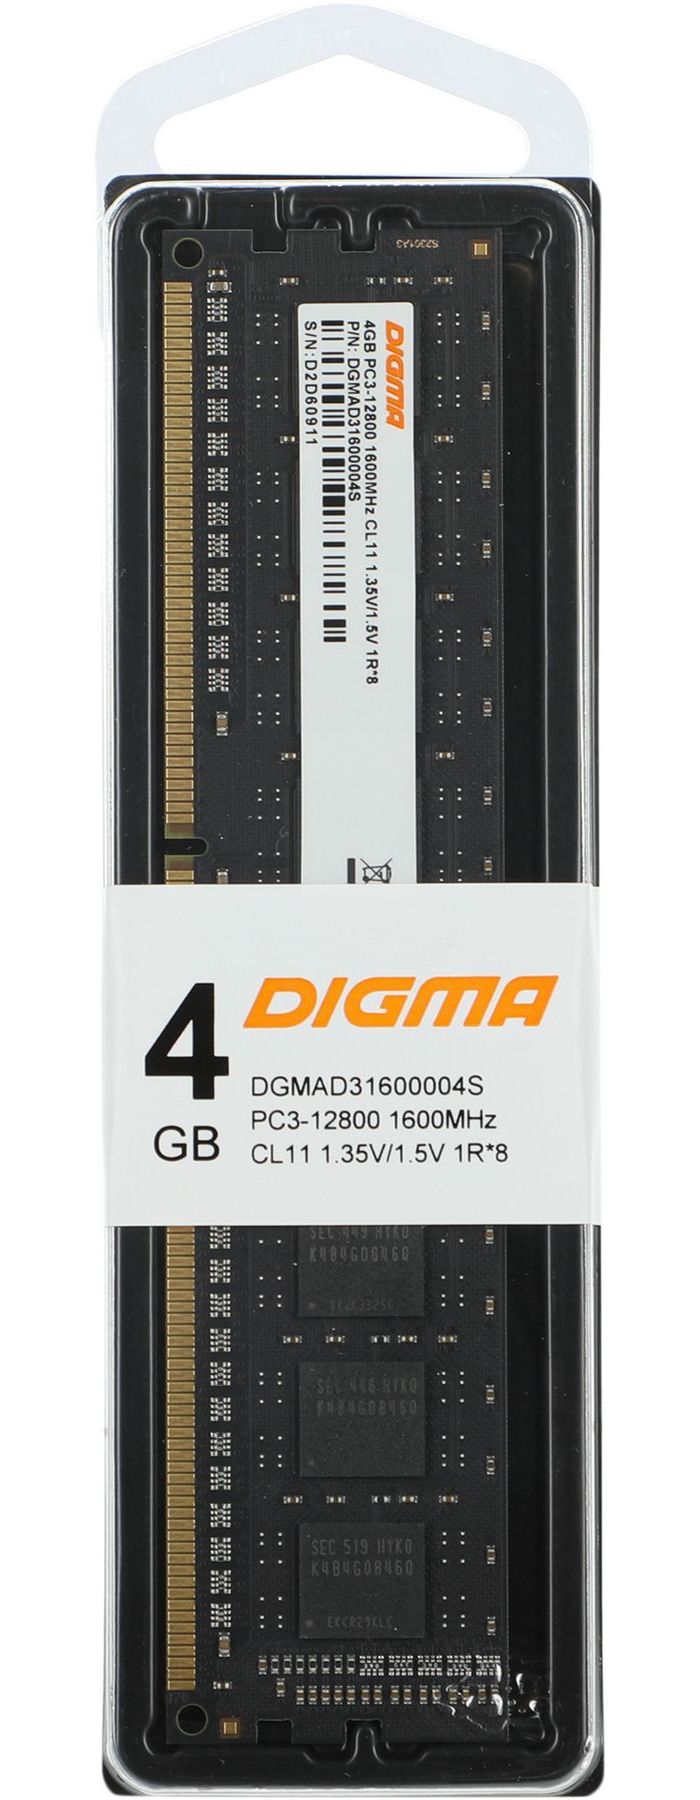 Оперативная память DDR3L Digma 4Gb 1600MHz DIMM (DGMAD31600004S) память оперативная ddr3l netac pc12800 4gb 1600mhz ntbsd3n16sp 04